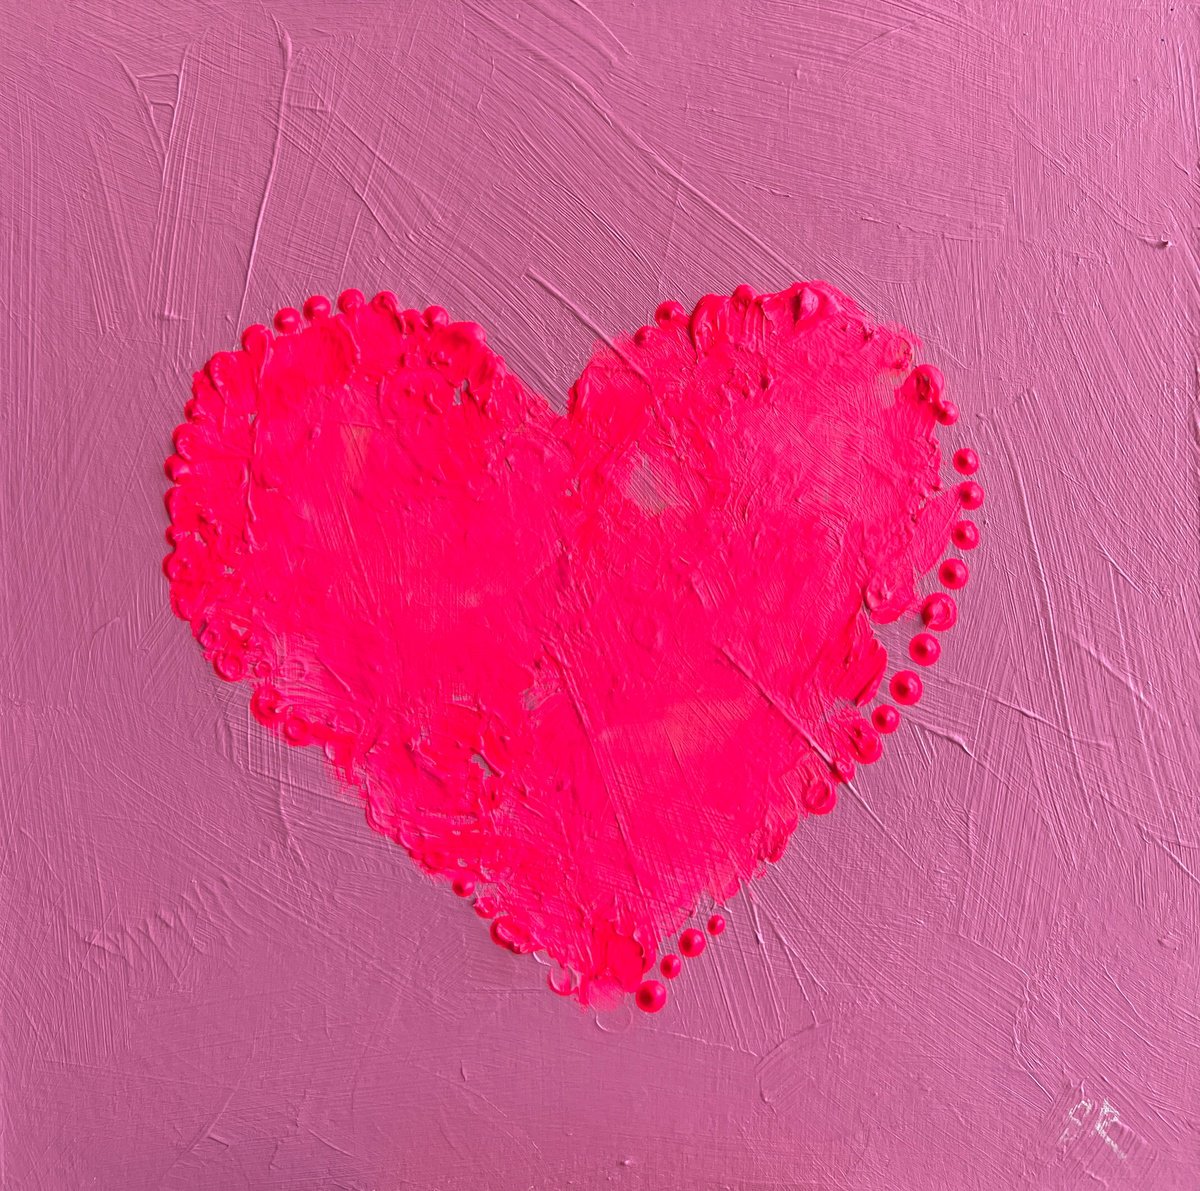 FLASHY PINK HEART _ original oil painting, simple visual art, home decor, gift by Sasha Robinson